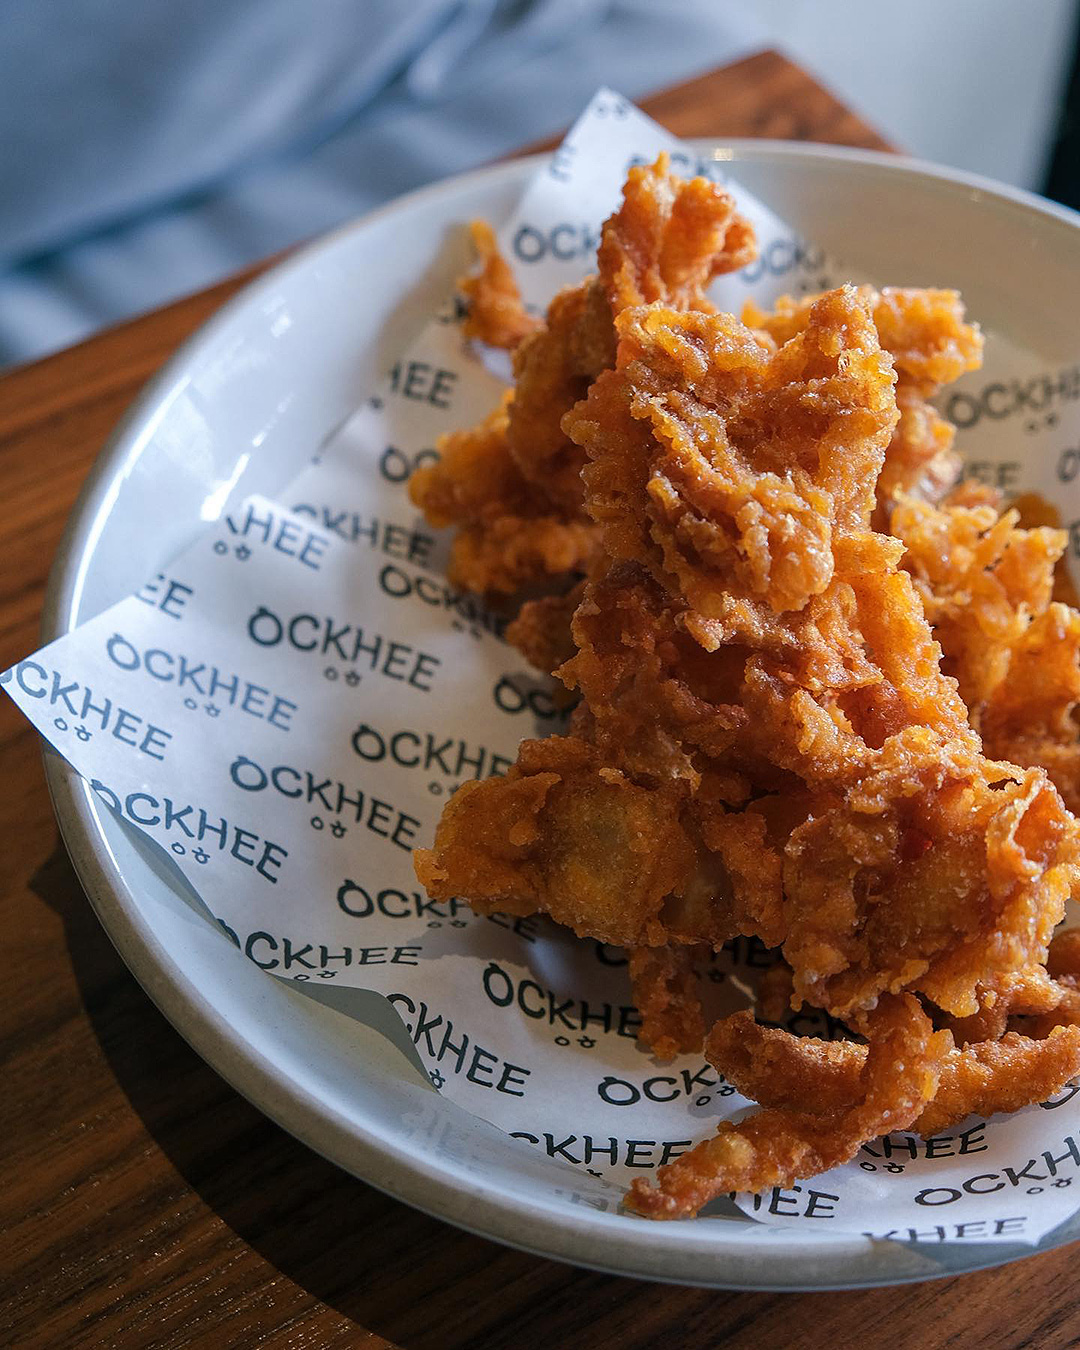 A plate of fried chicken skin from Ockhee.